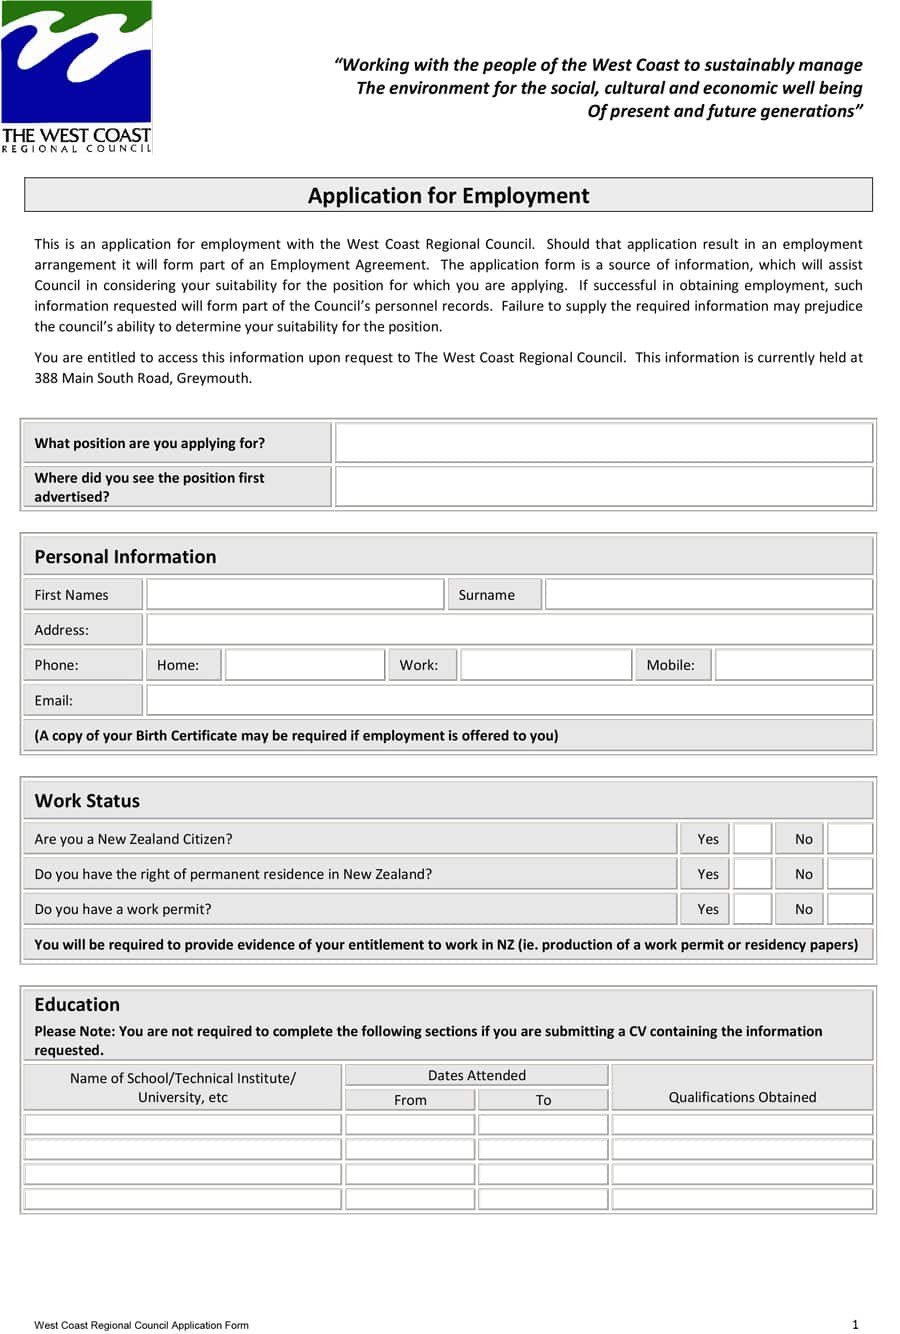 Free Job Application Template 50 Free Employment Job Application form Templates